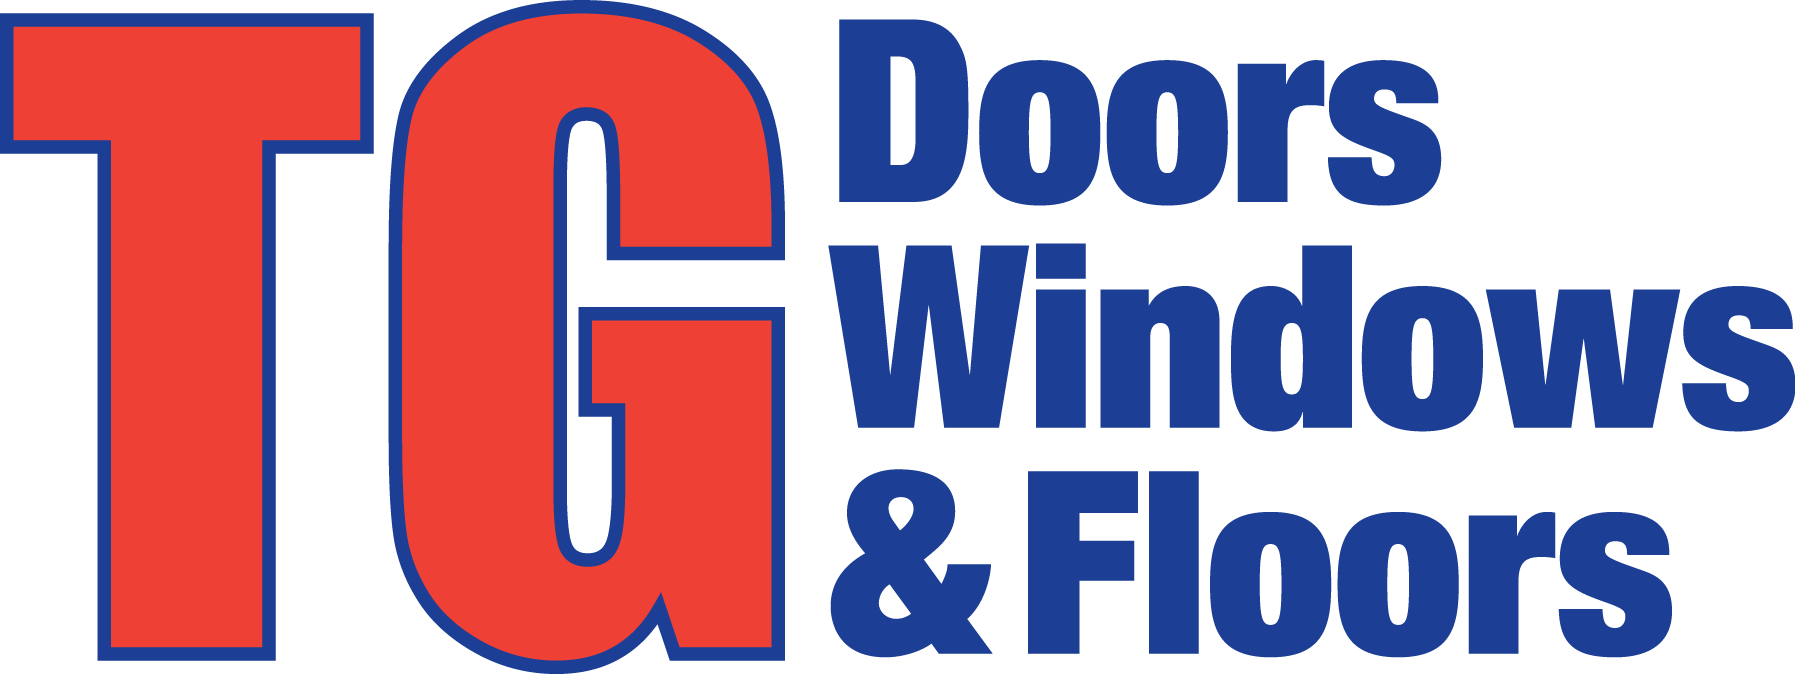 TG Doors, Windows & Floors Centre